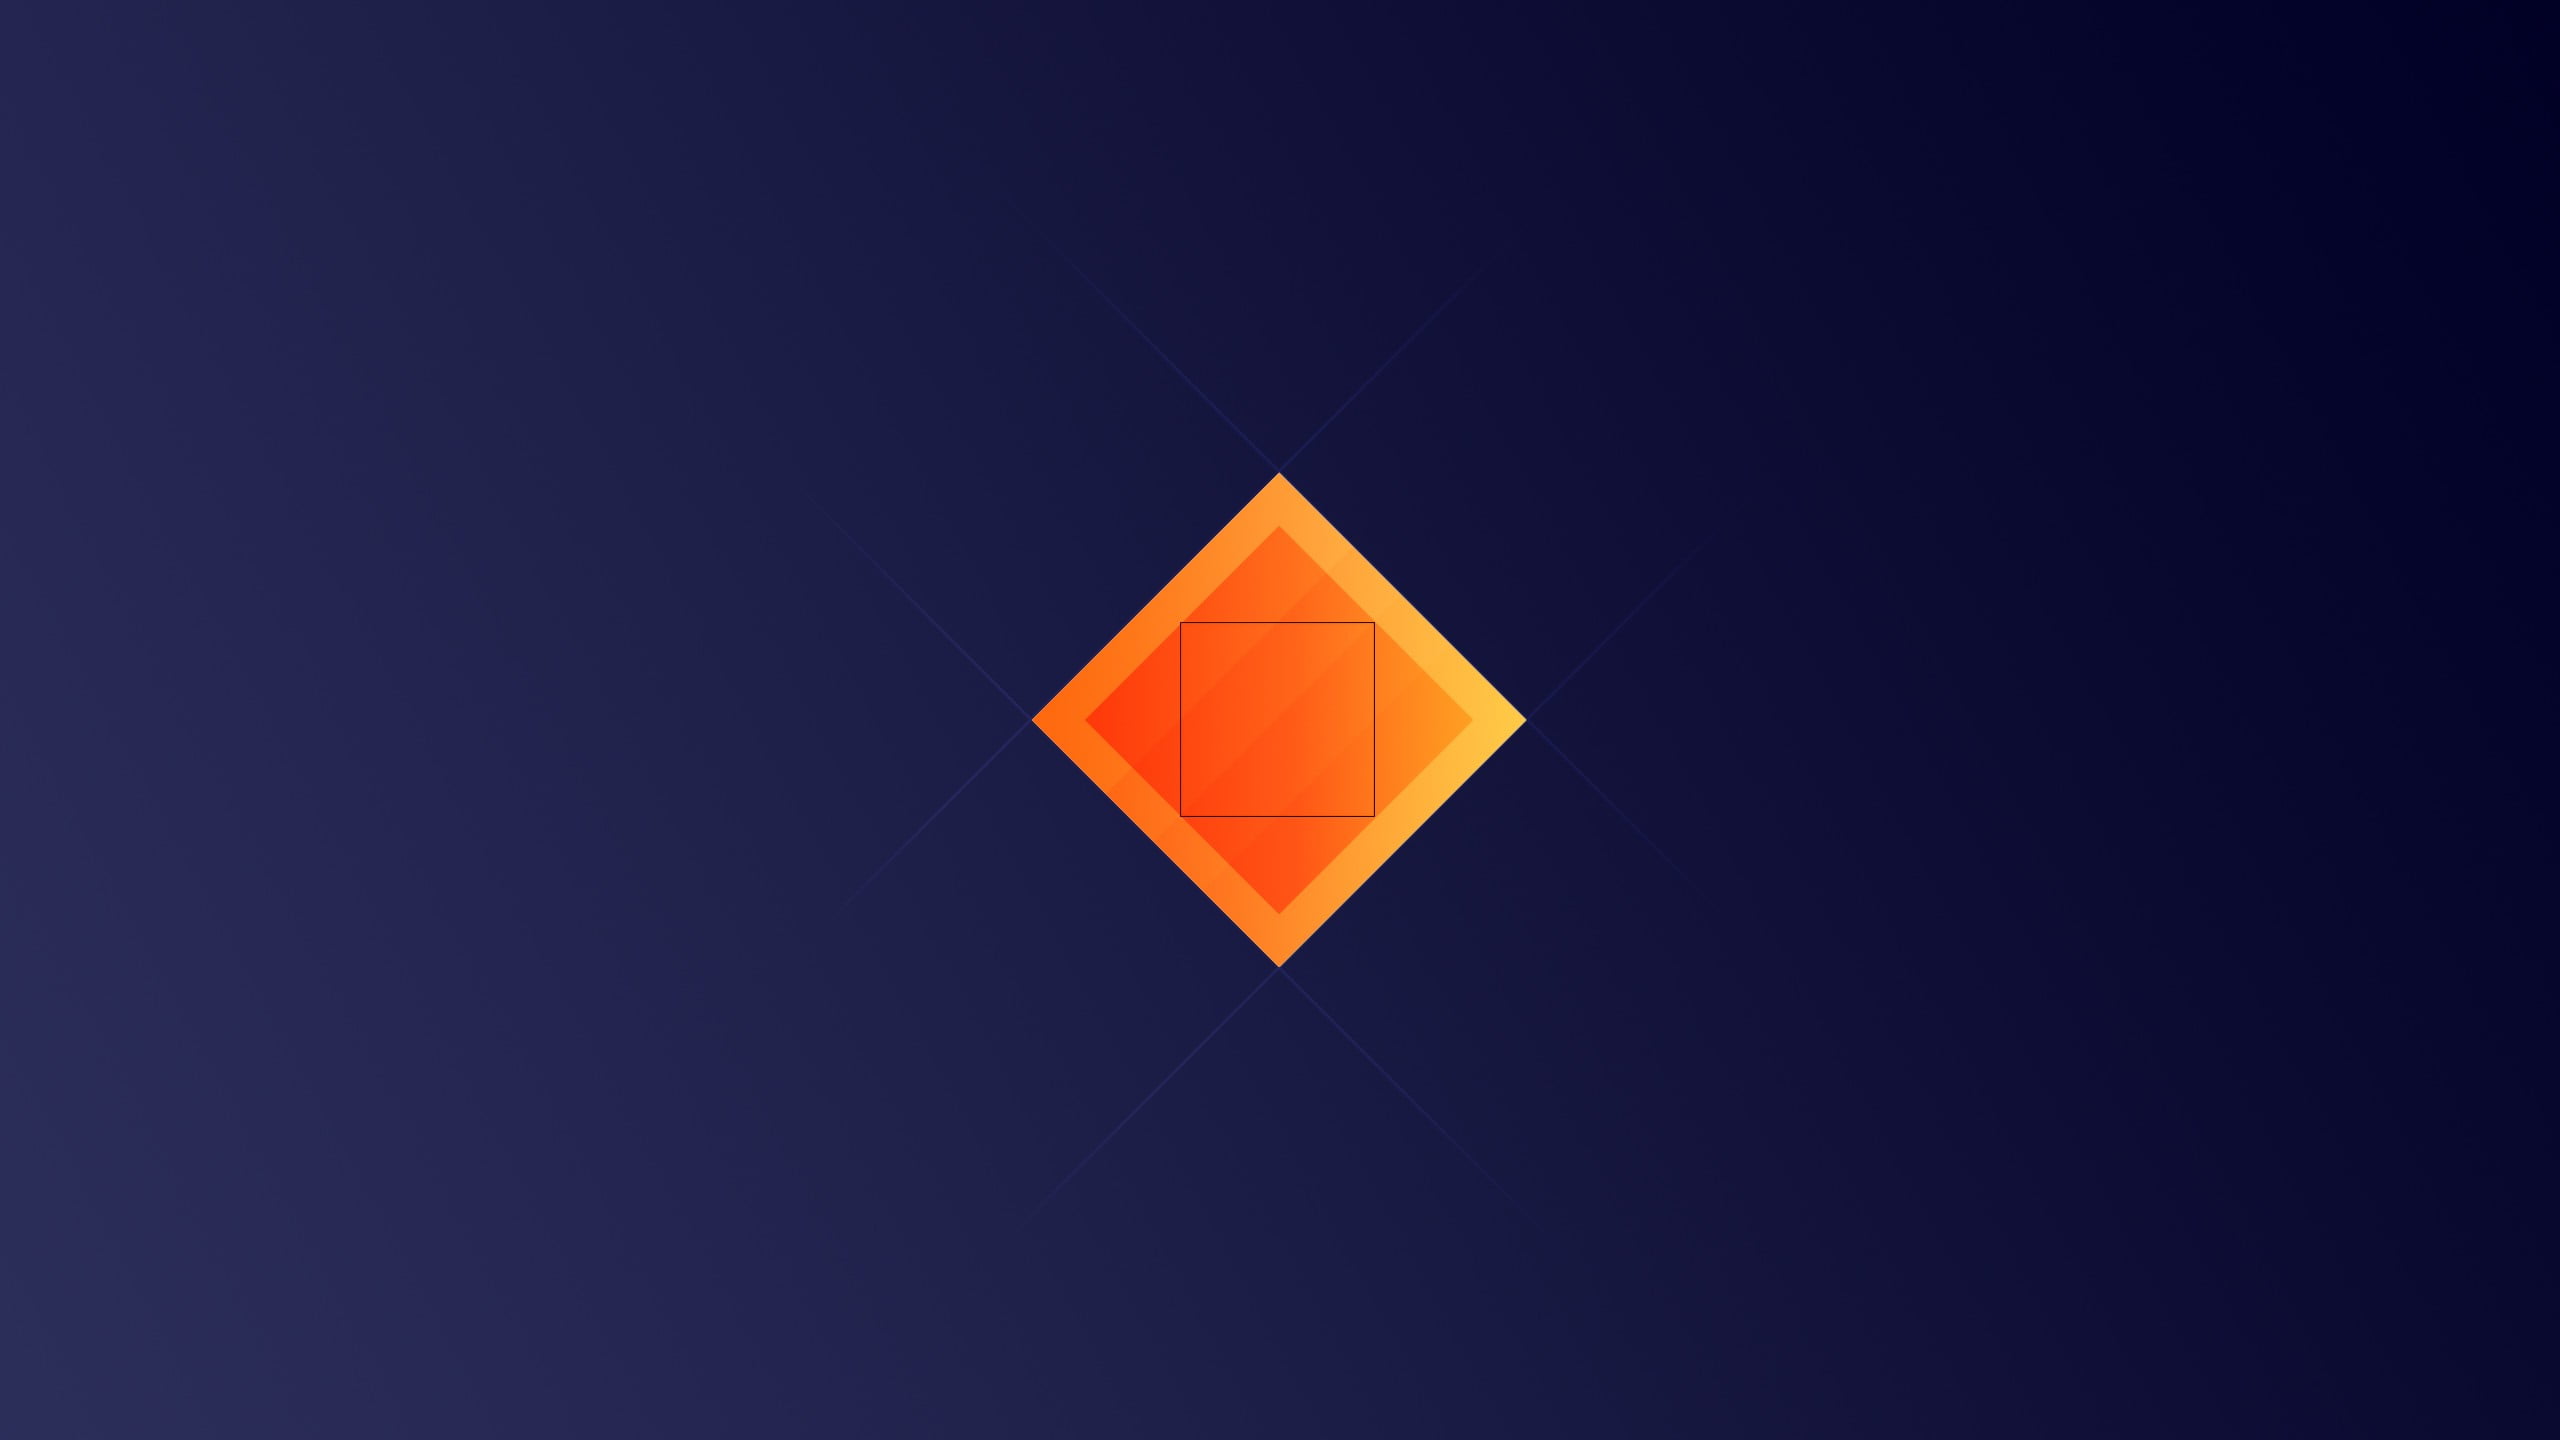 square orange and yellow logo, minimalism, simple background